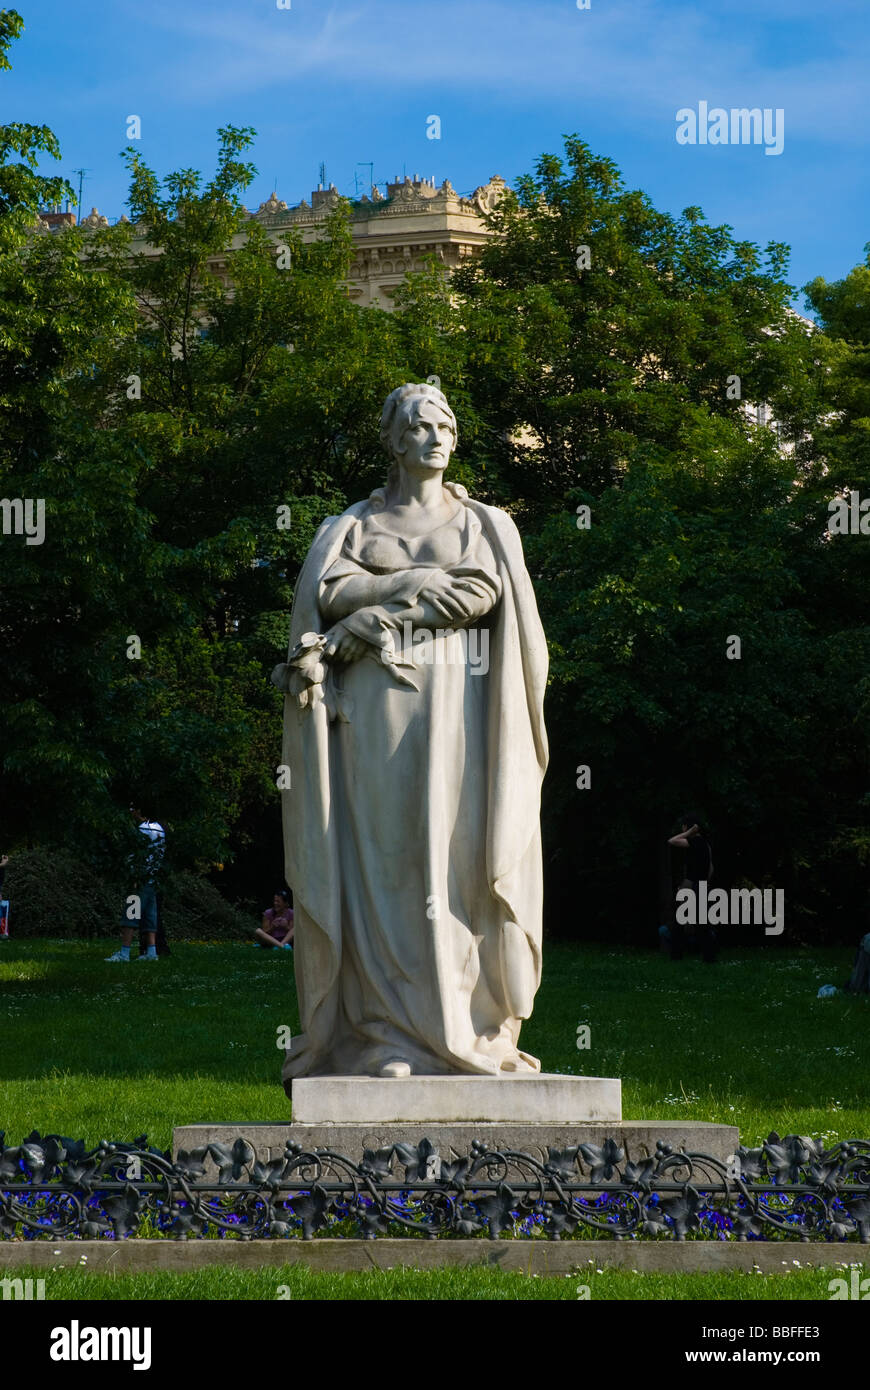 Statue of opera singer Ema Destinova at Celakovskeho sady park in central Prague Czech Republic Europe Stock Photo